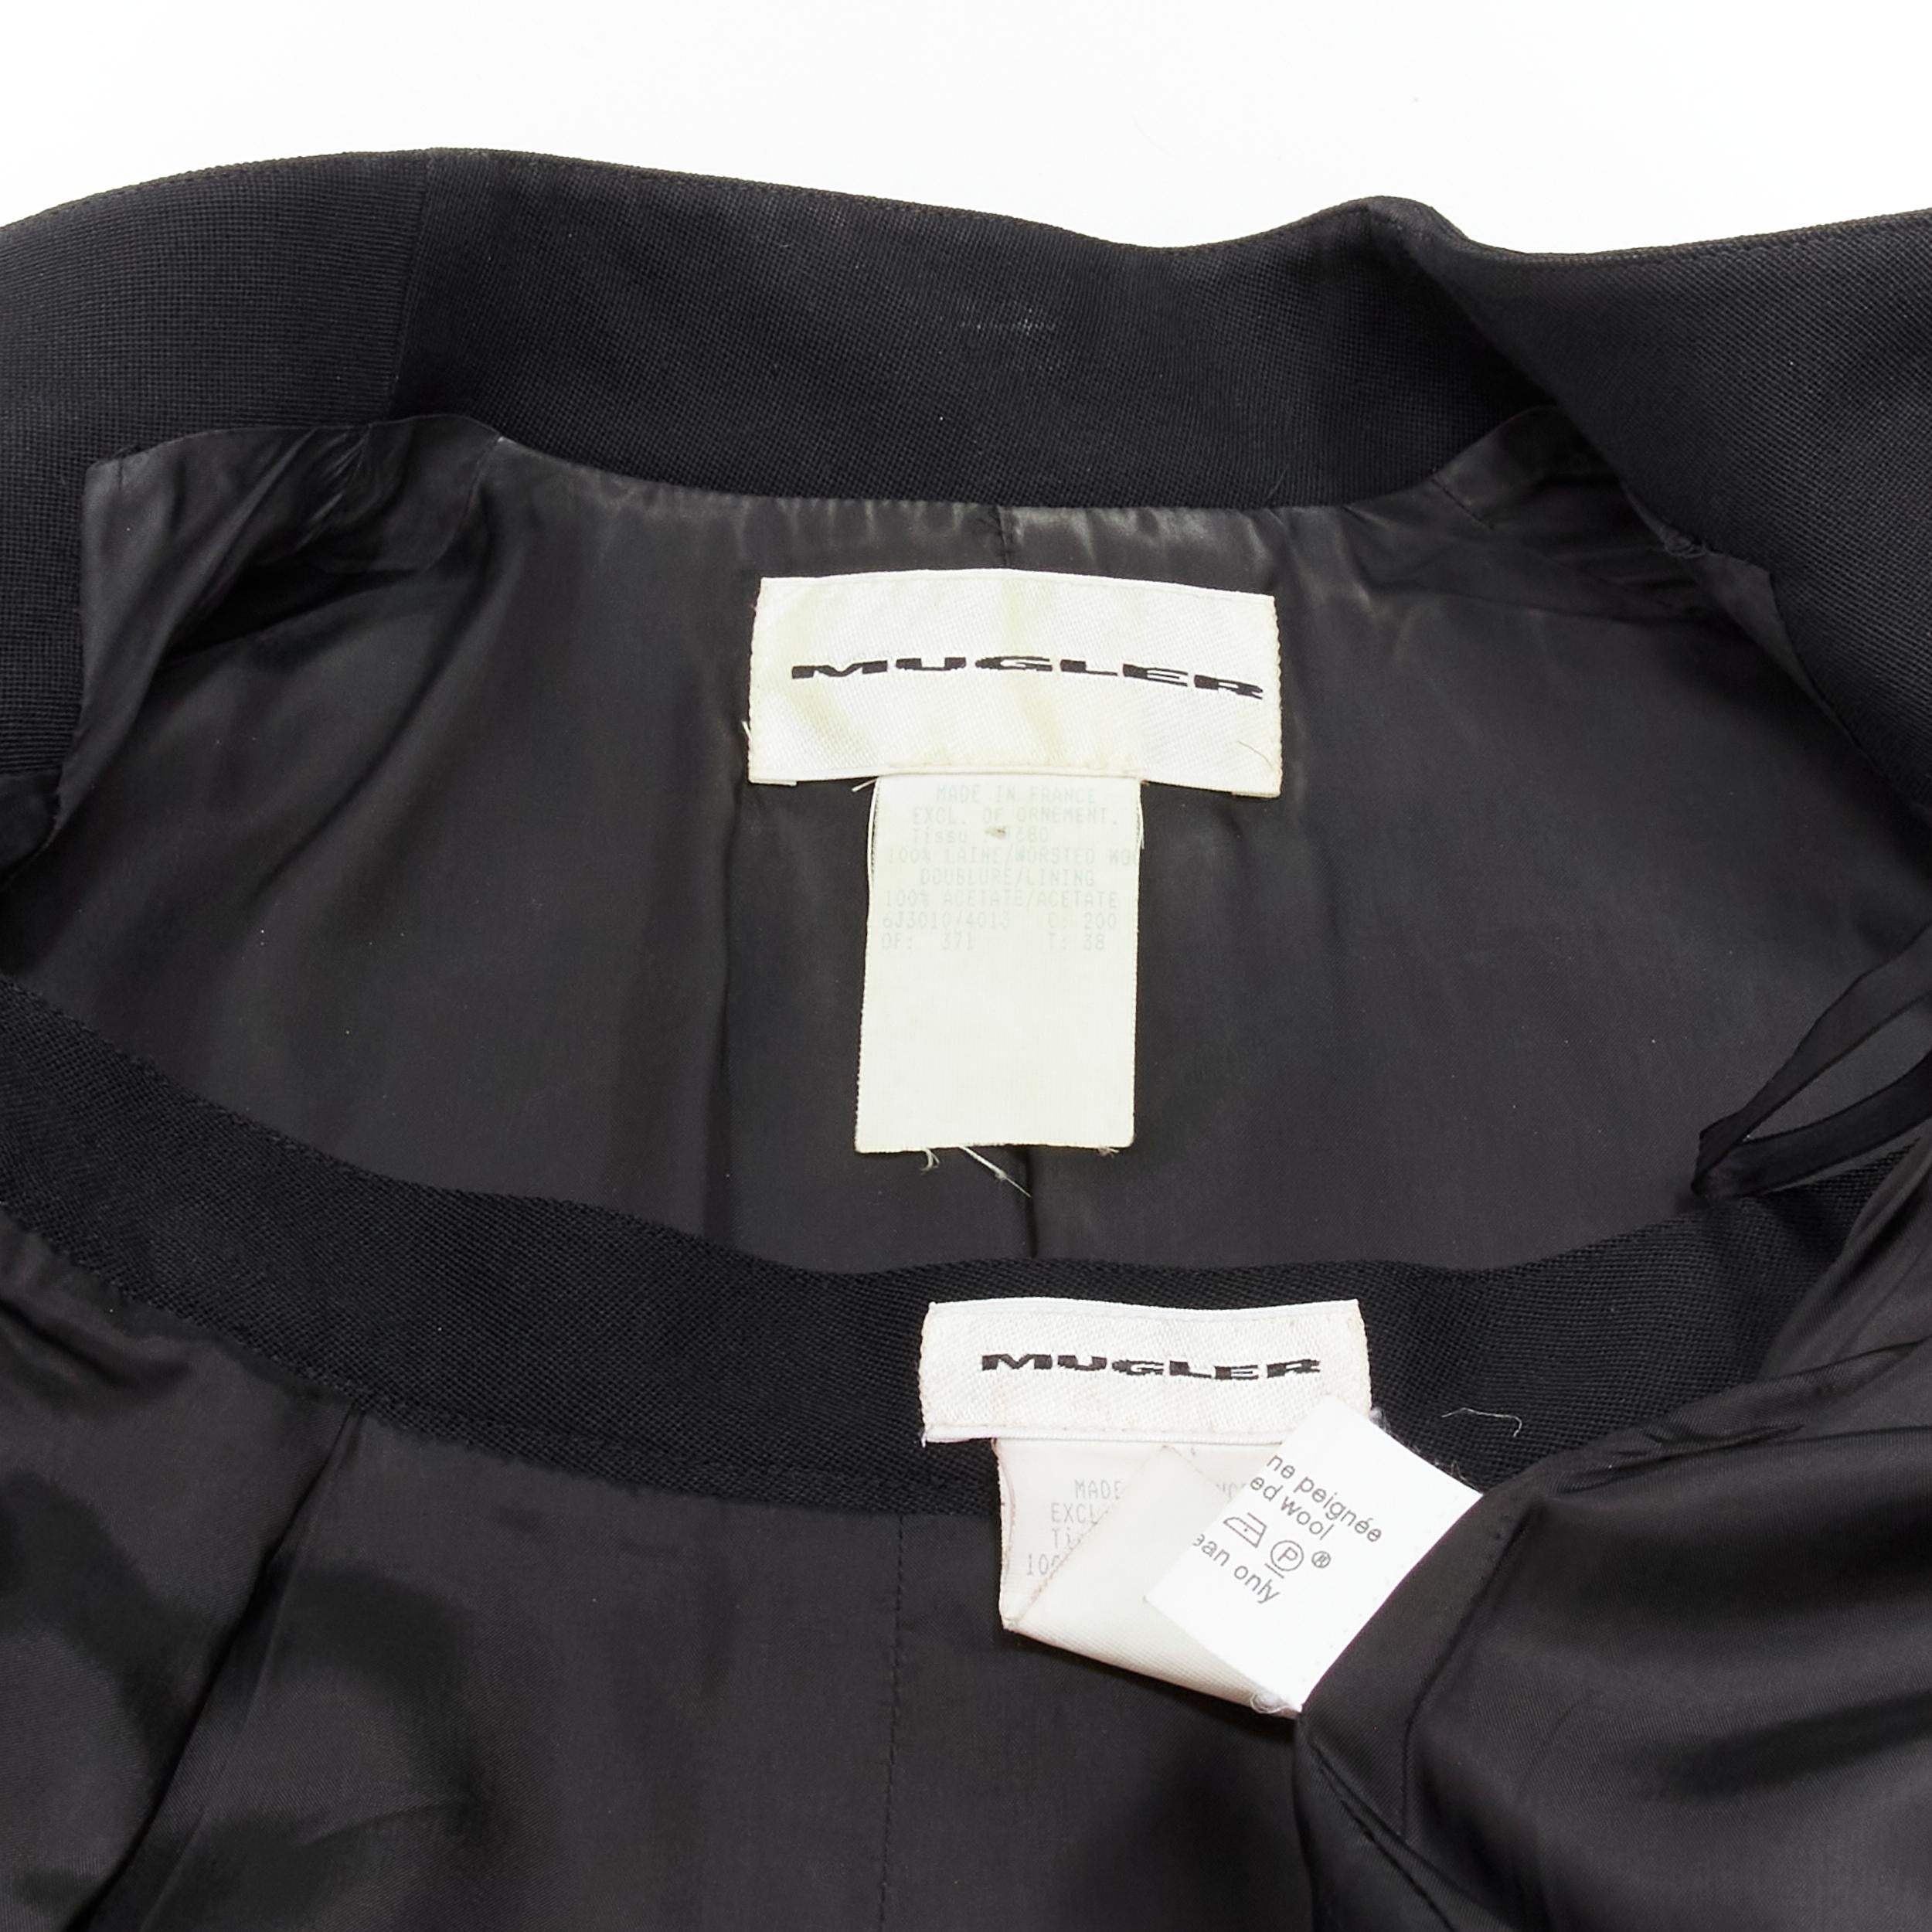 MUGLER Vintage silver bar double breasted contour peplum jacket skirt FR38 S For Sale 5